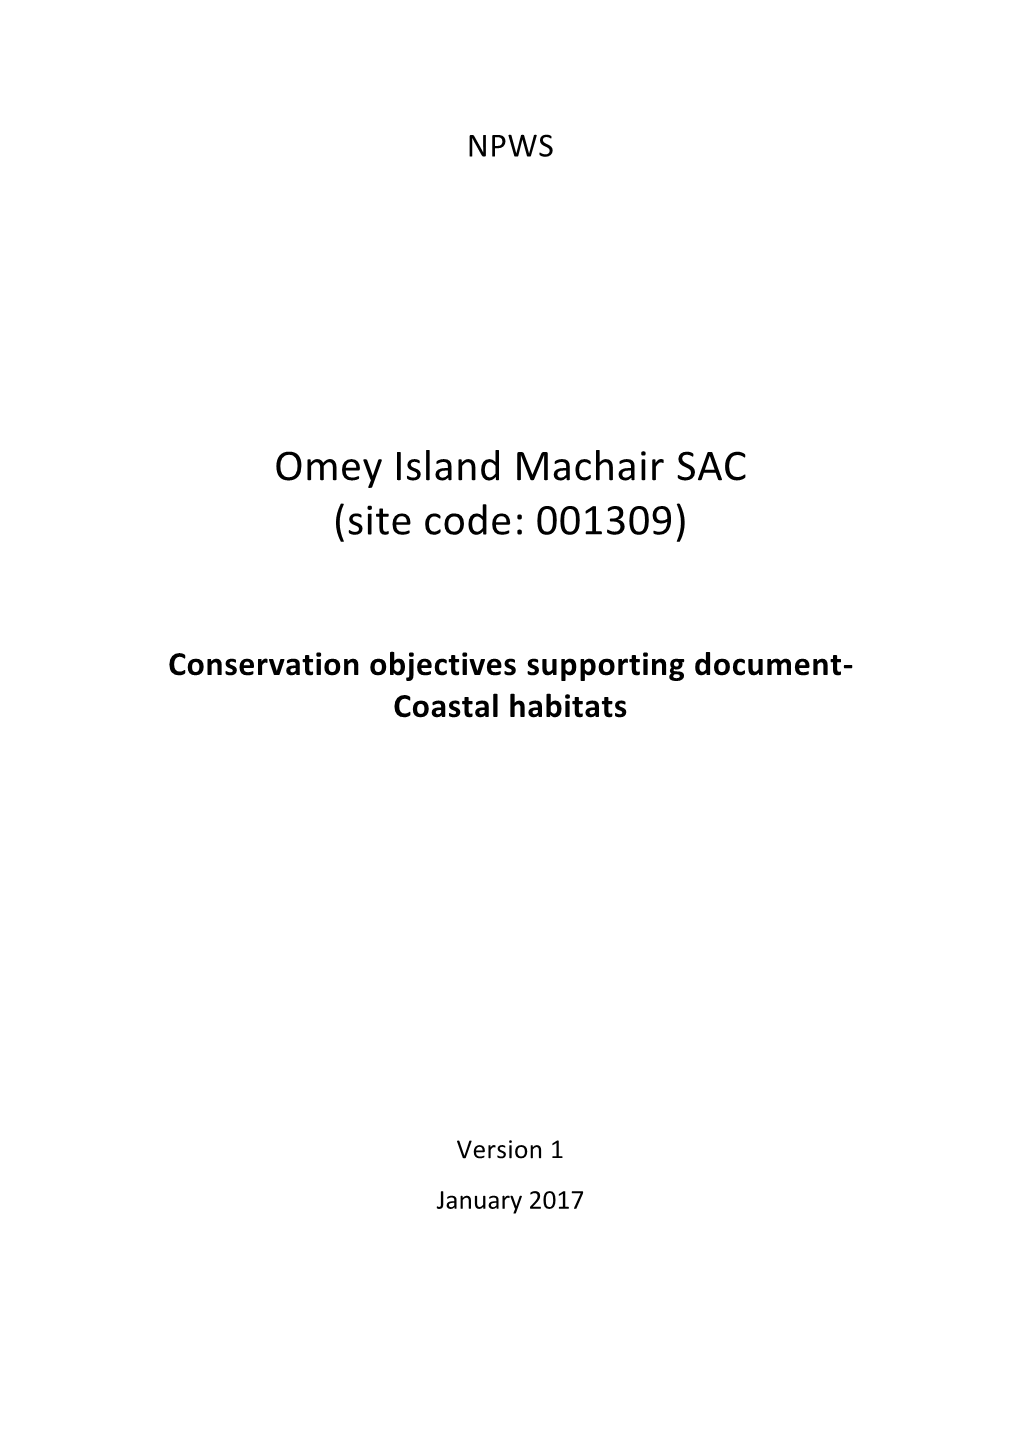 Omey Island Machair SAC (Site Code: 001309)